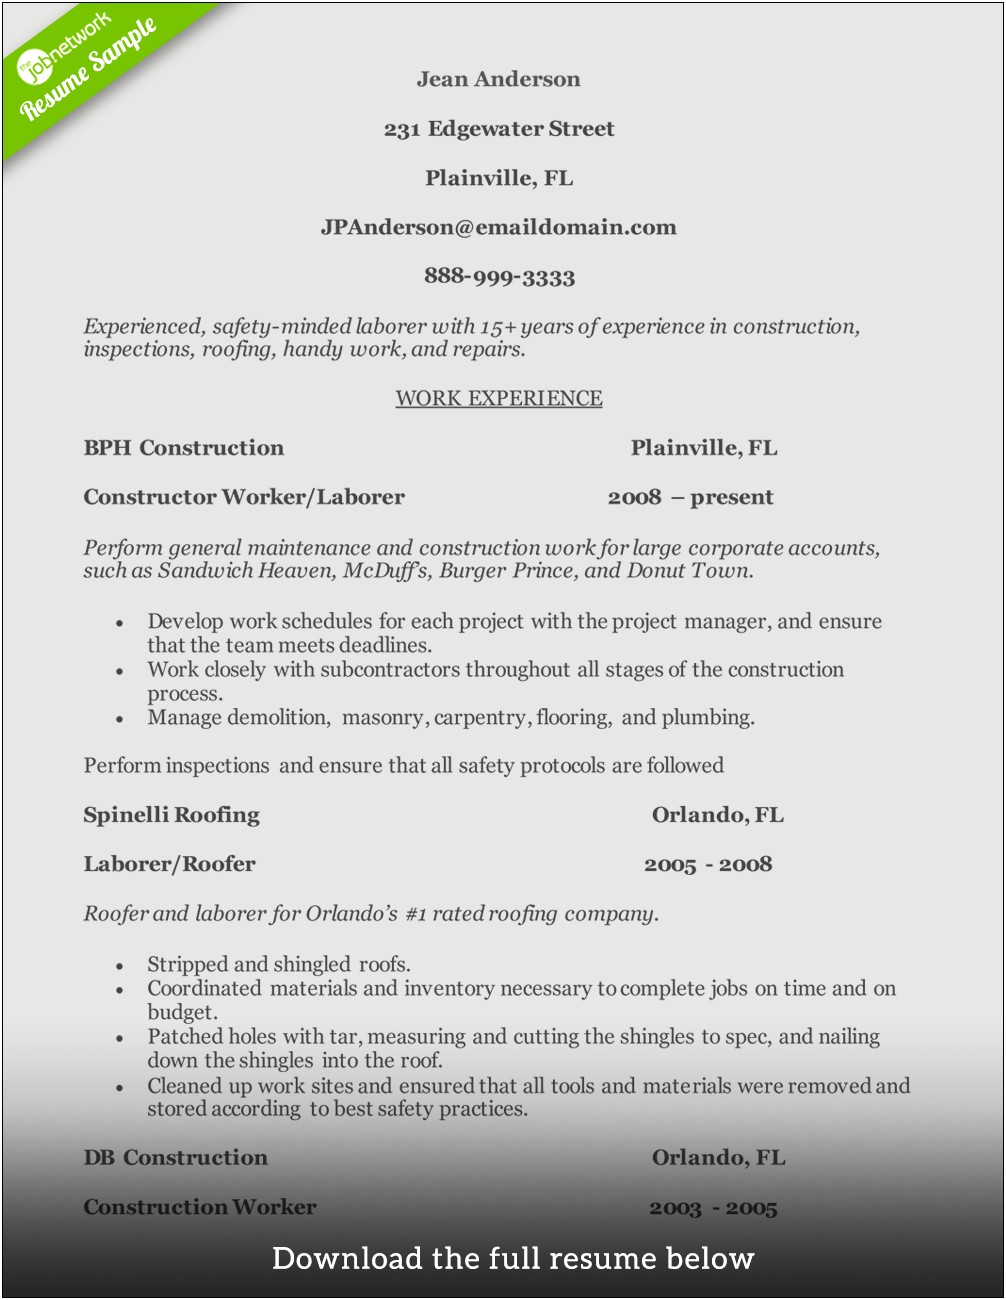 Sample Cover Letter For Resume Construction